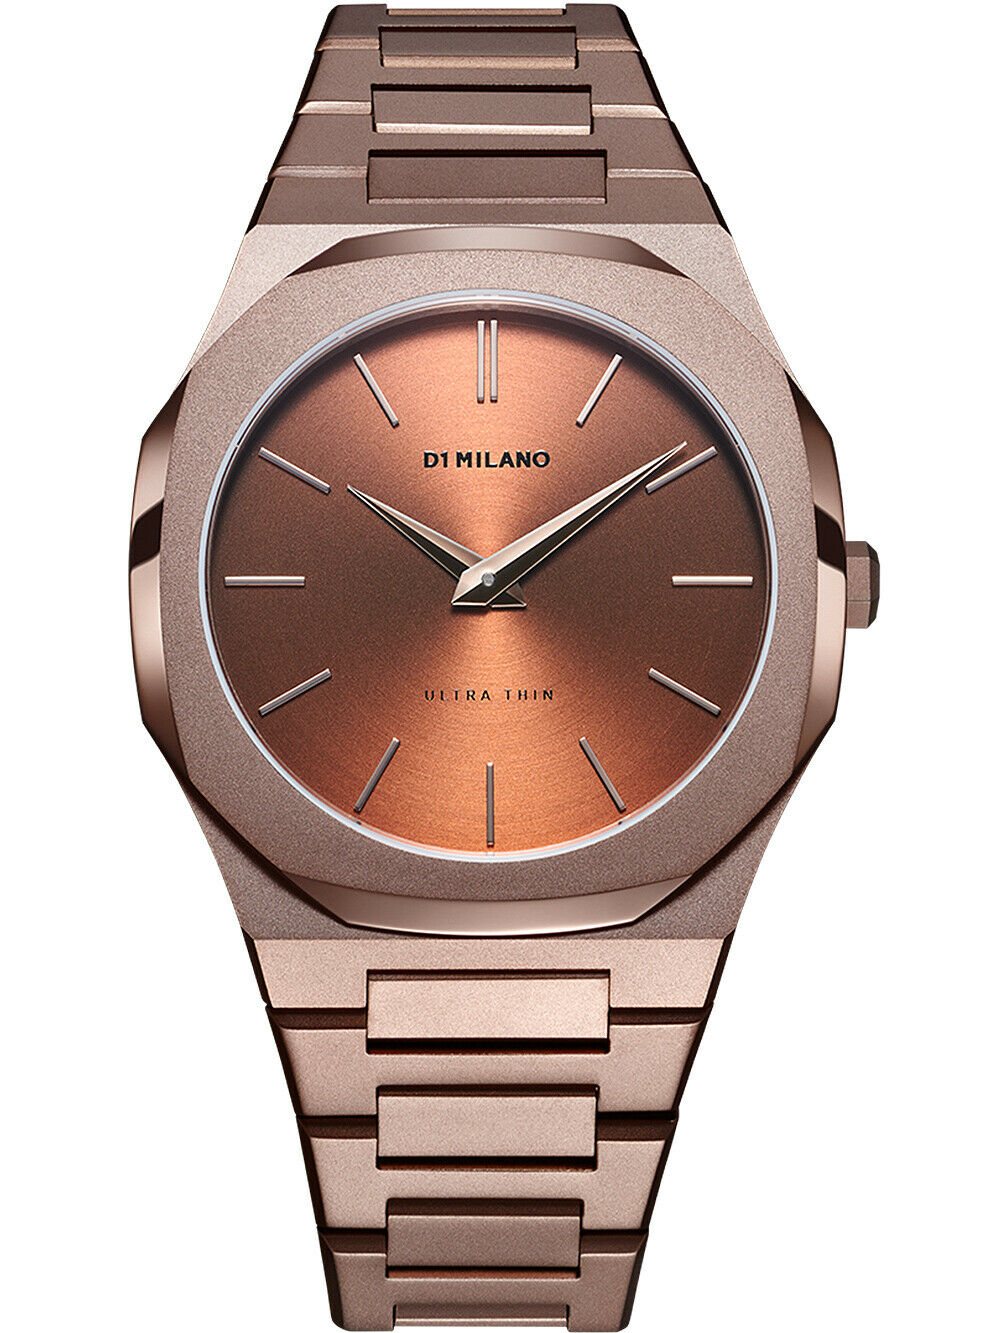 Photos - Wrist Watch Milano D1  Watch Ultra Thin Chocolate - Brown DLM-037 